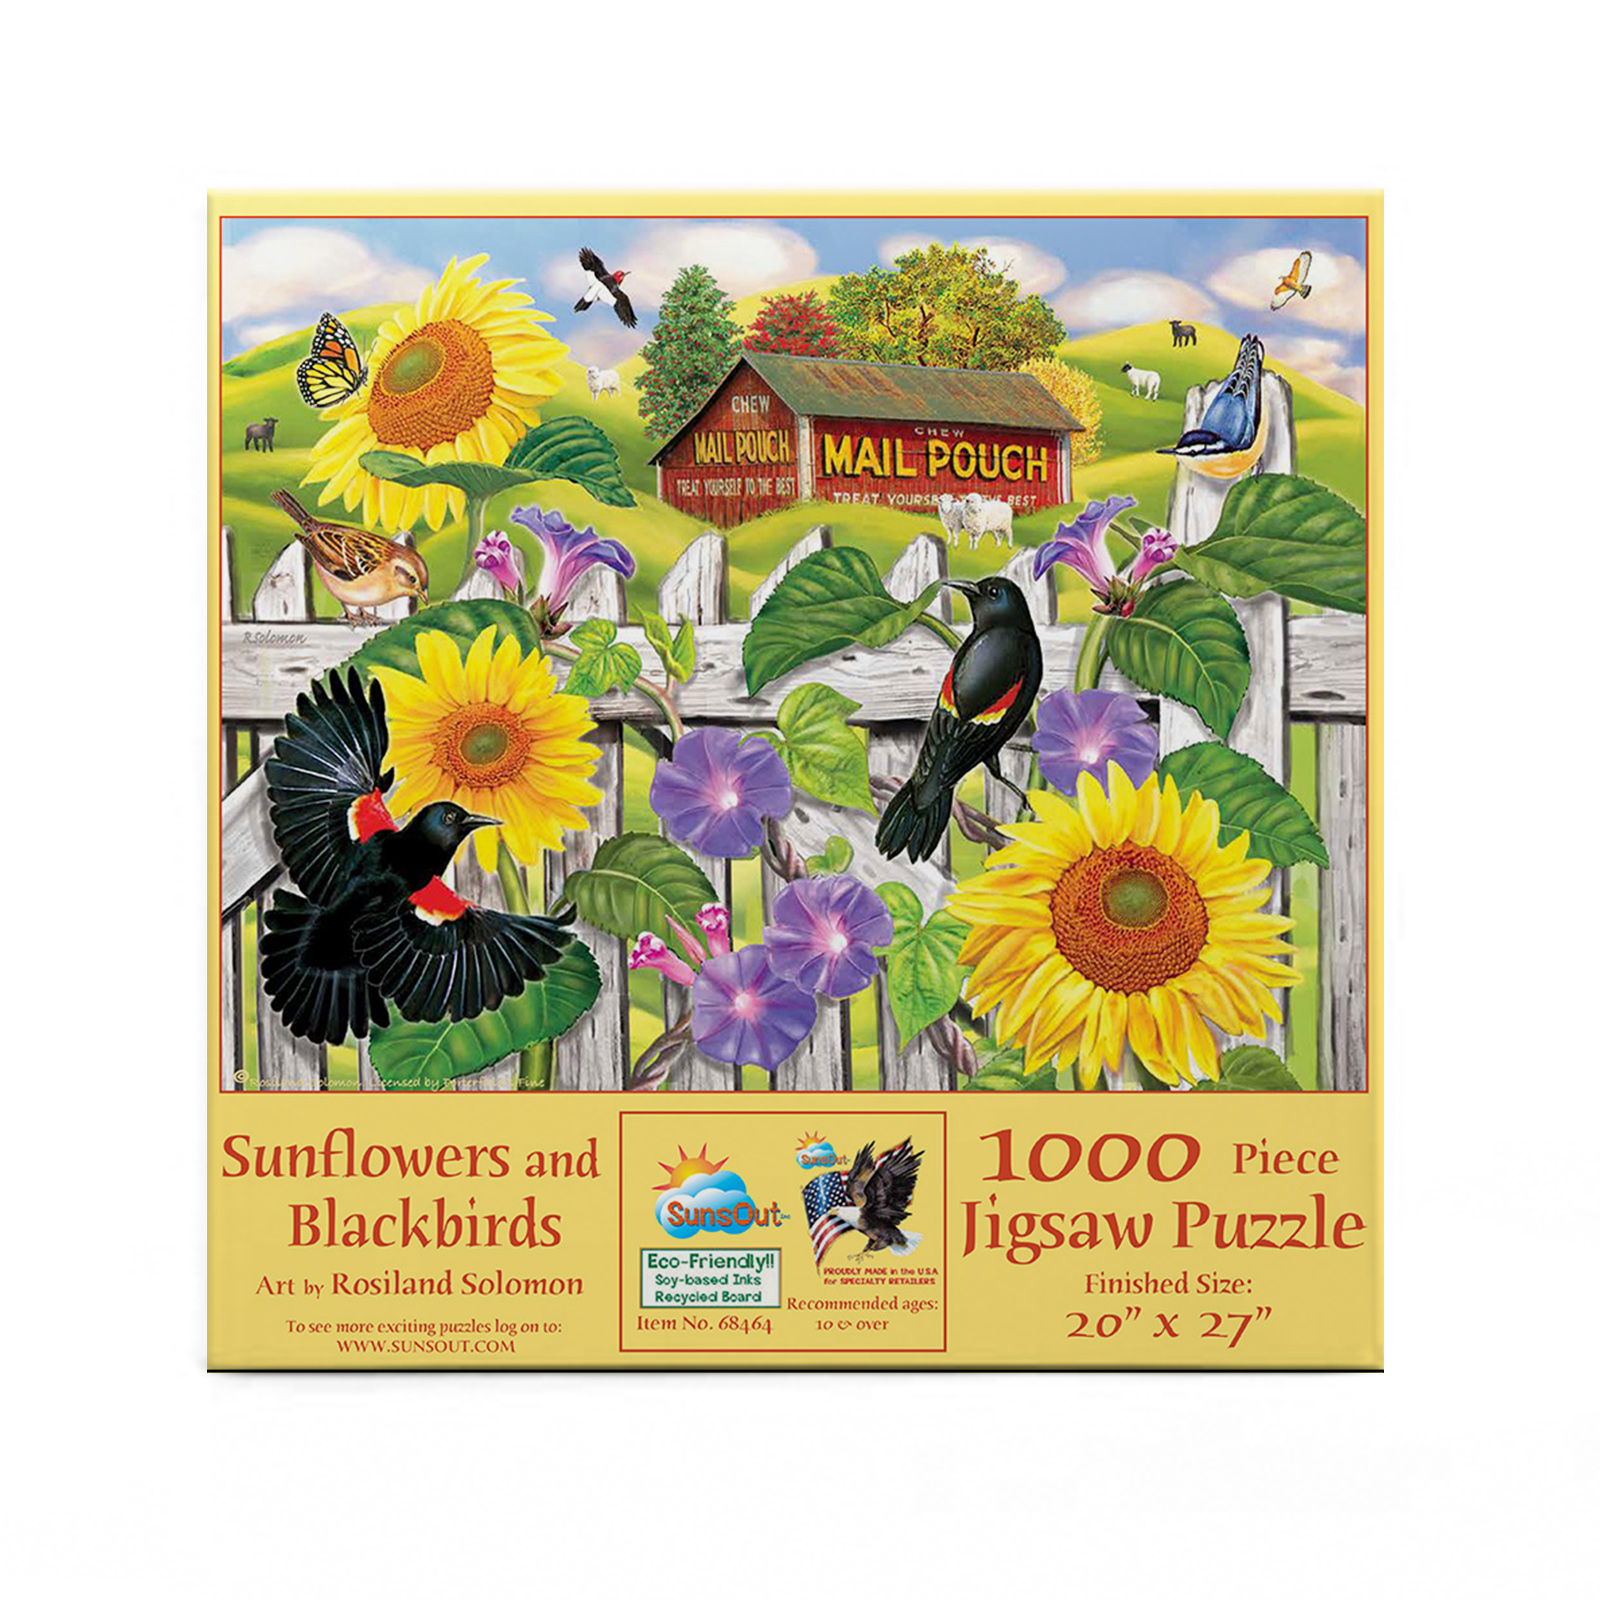 Sunflowers and Blackbirds